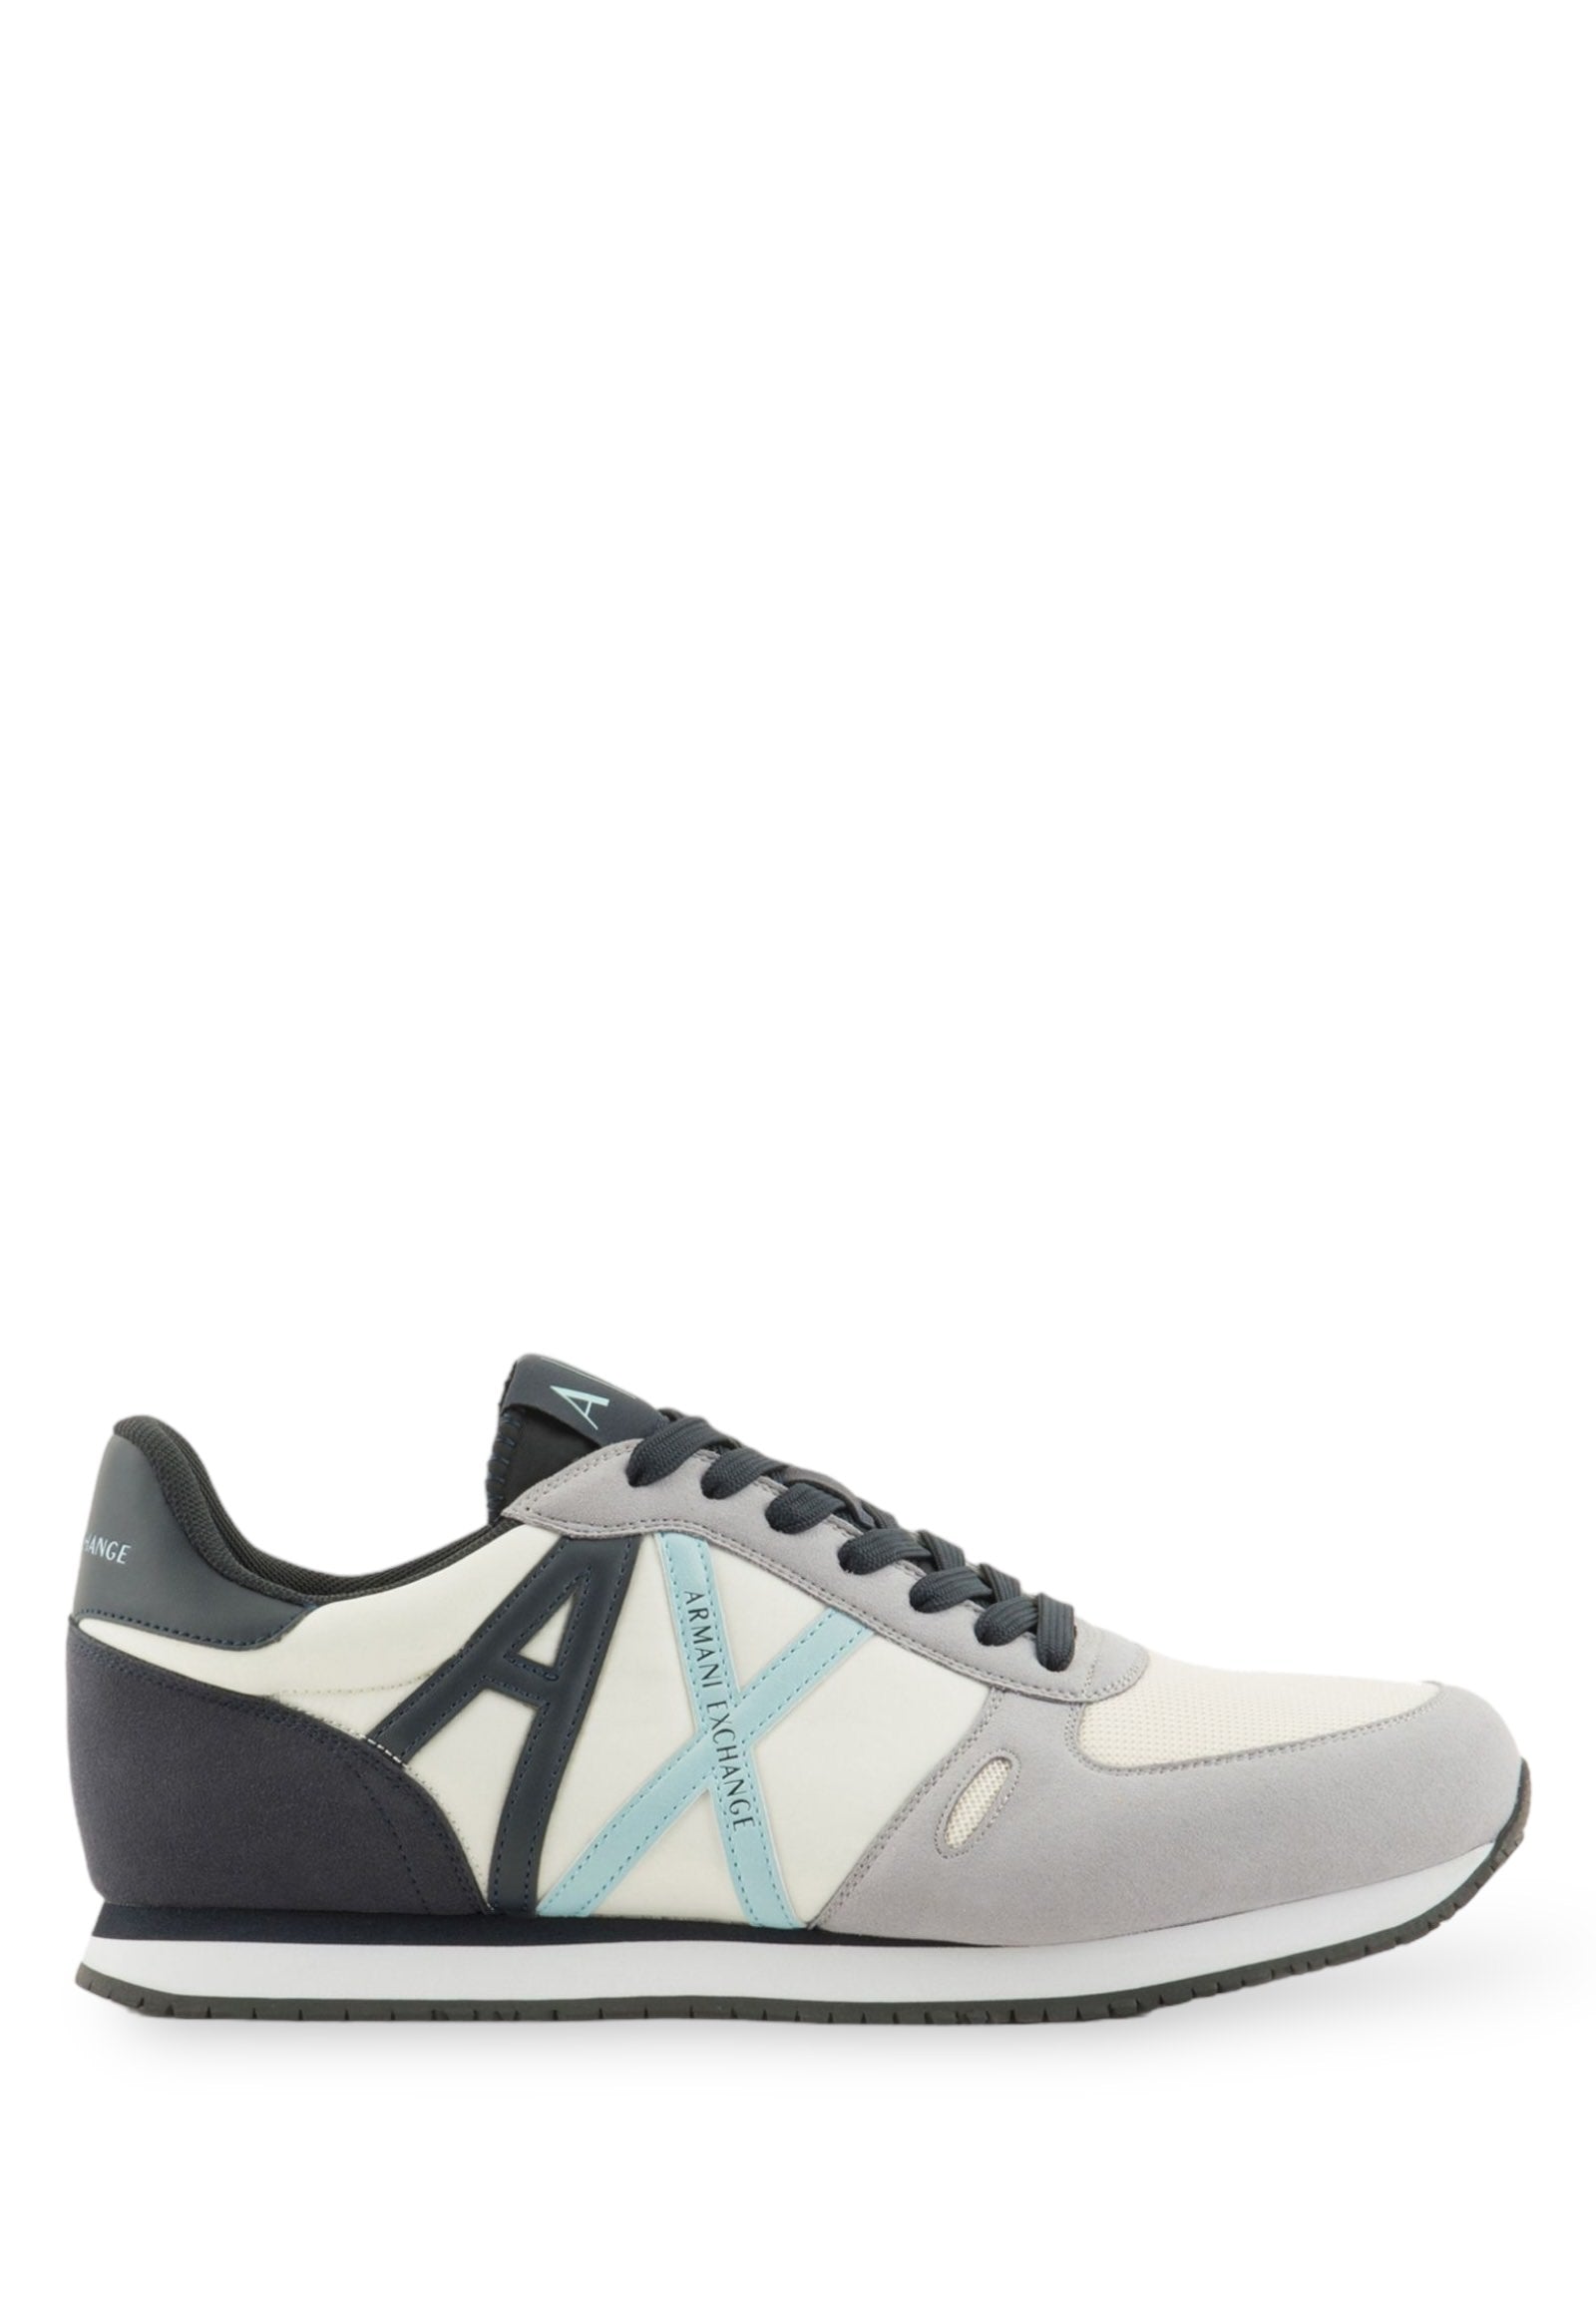 Armani Exchange Sneakers Xux017 Navy, Optic White, Grey